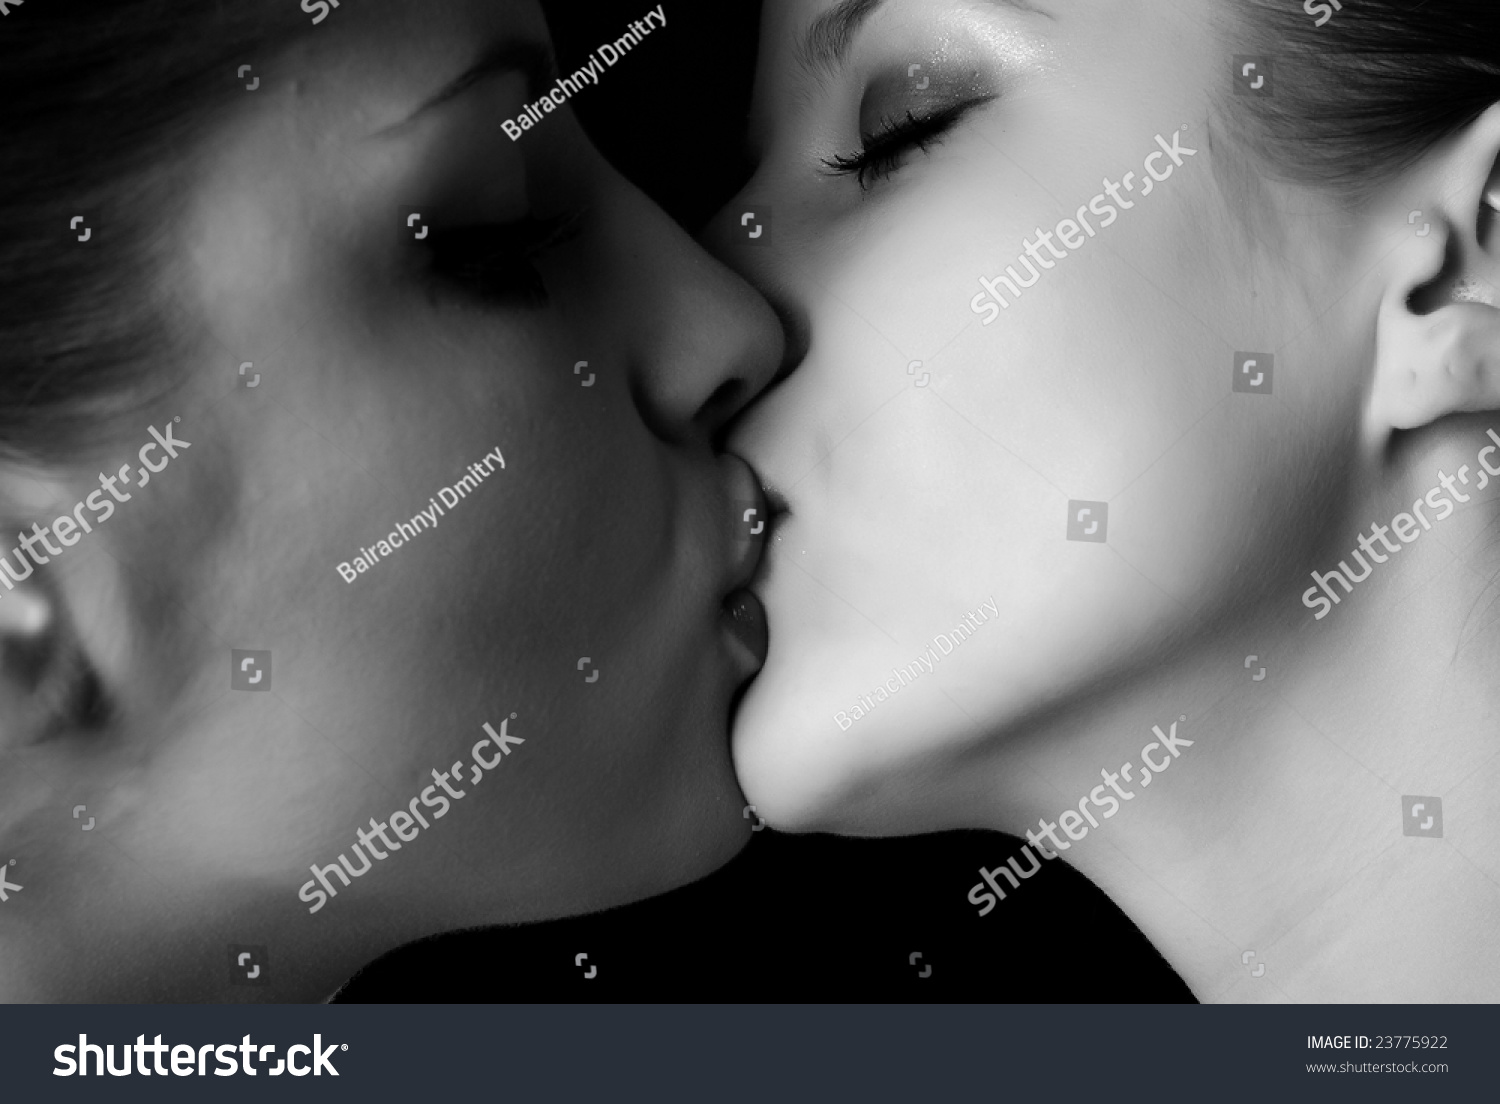 black lesbians kissing pictureshot freaky porn